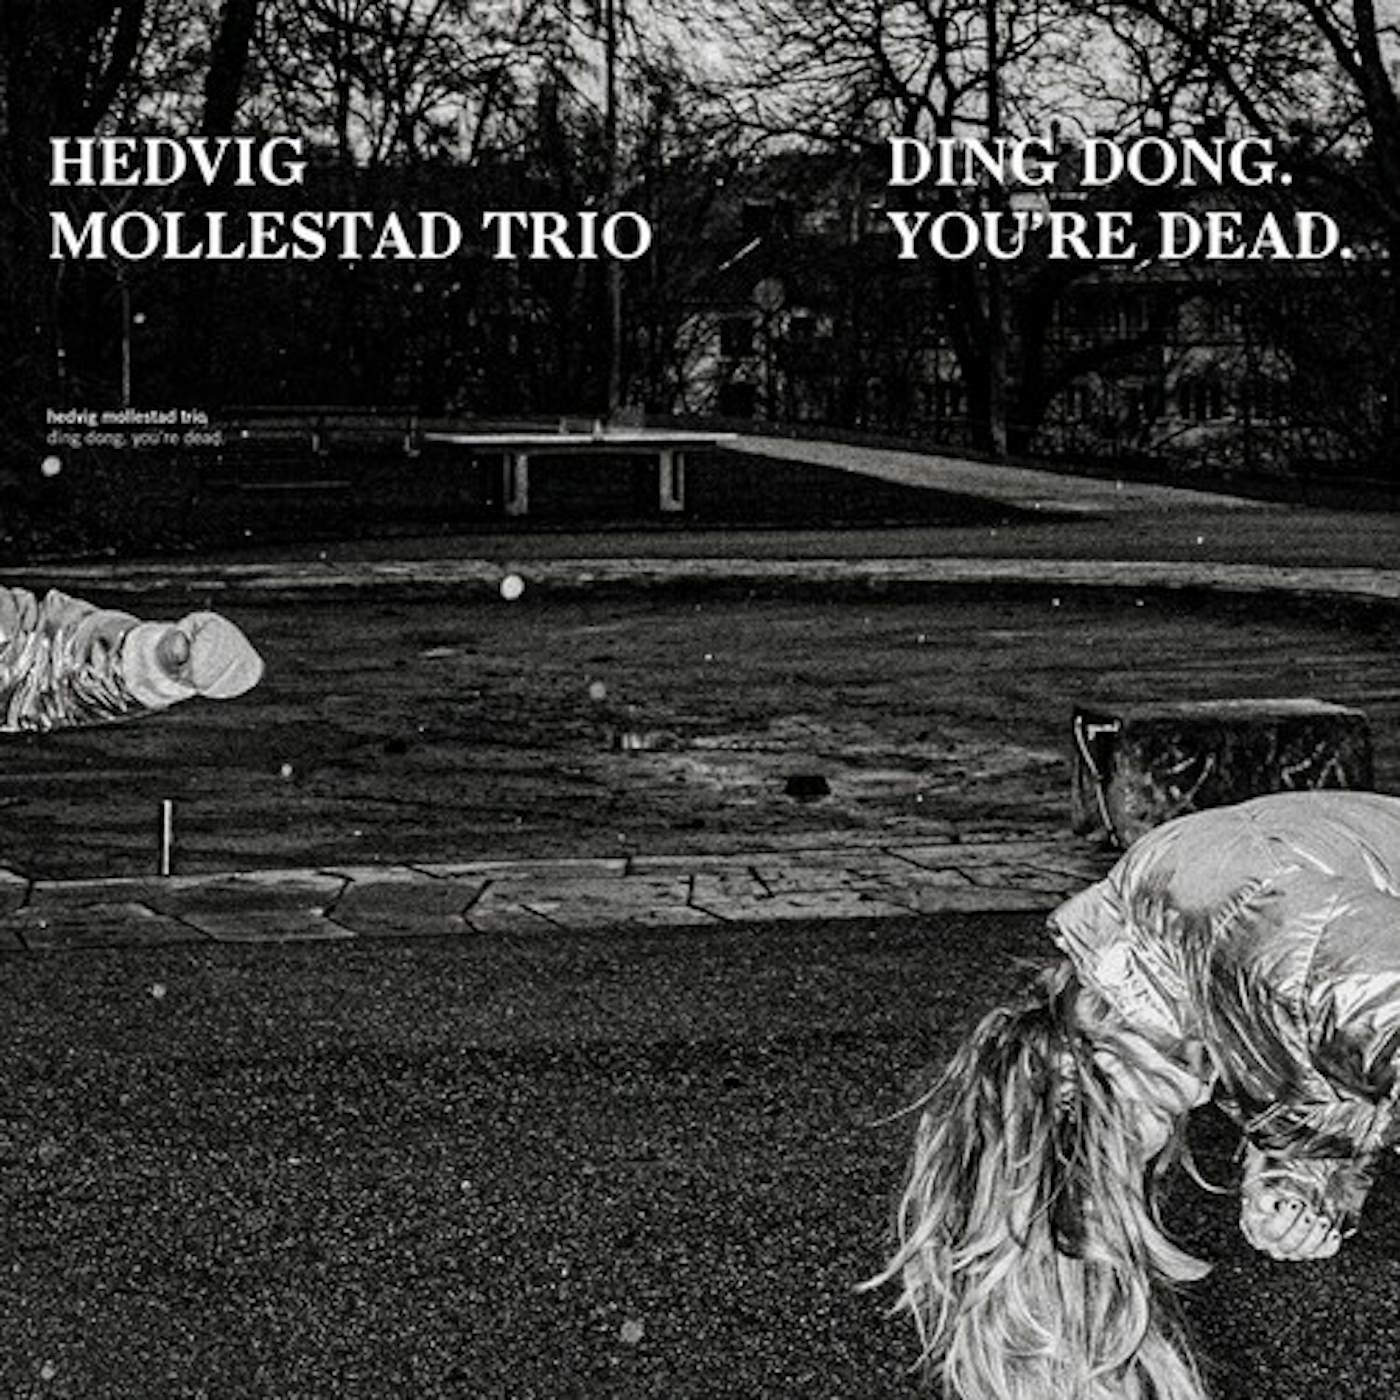 Hedvig Mollestad Trio DING DONG YOU'RE DEAD Vinyl Record